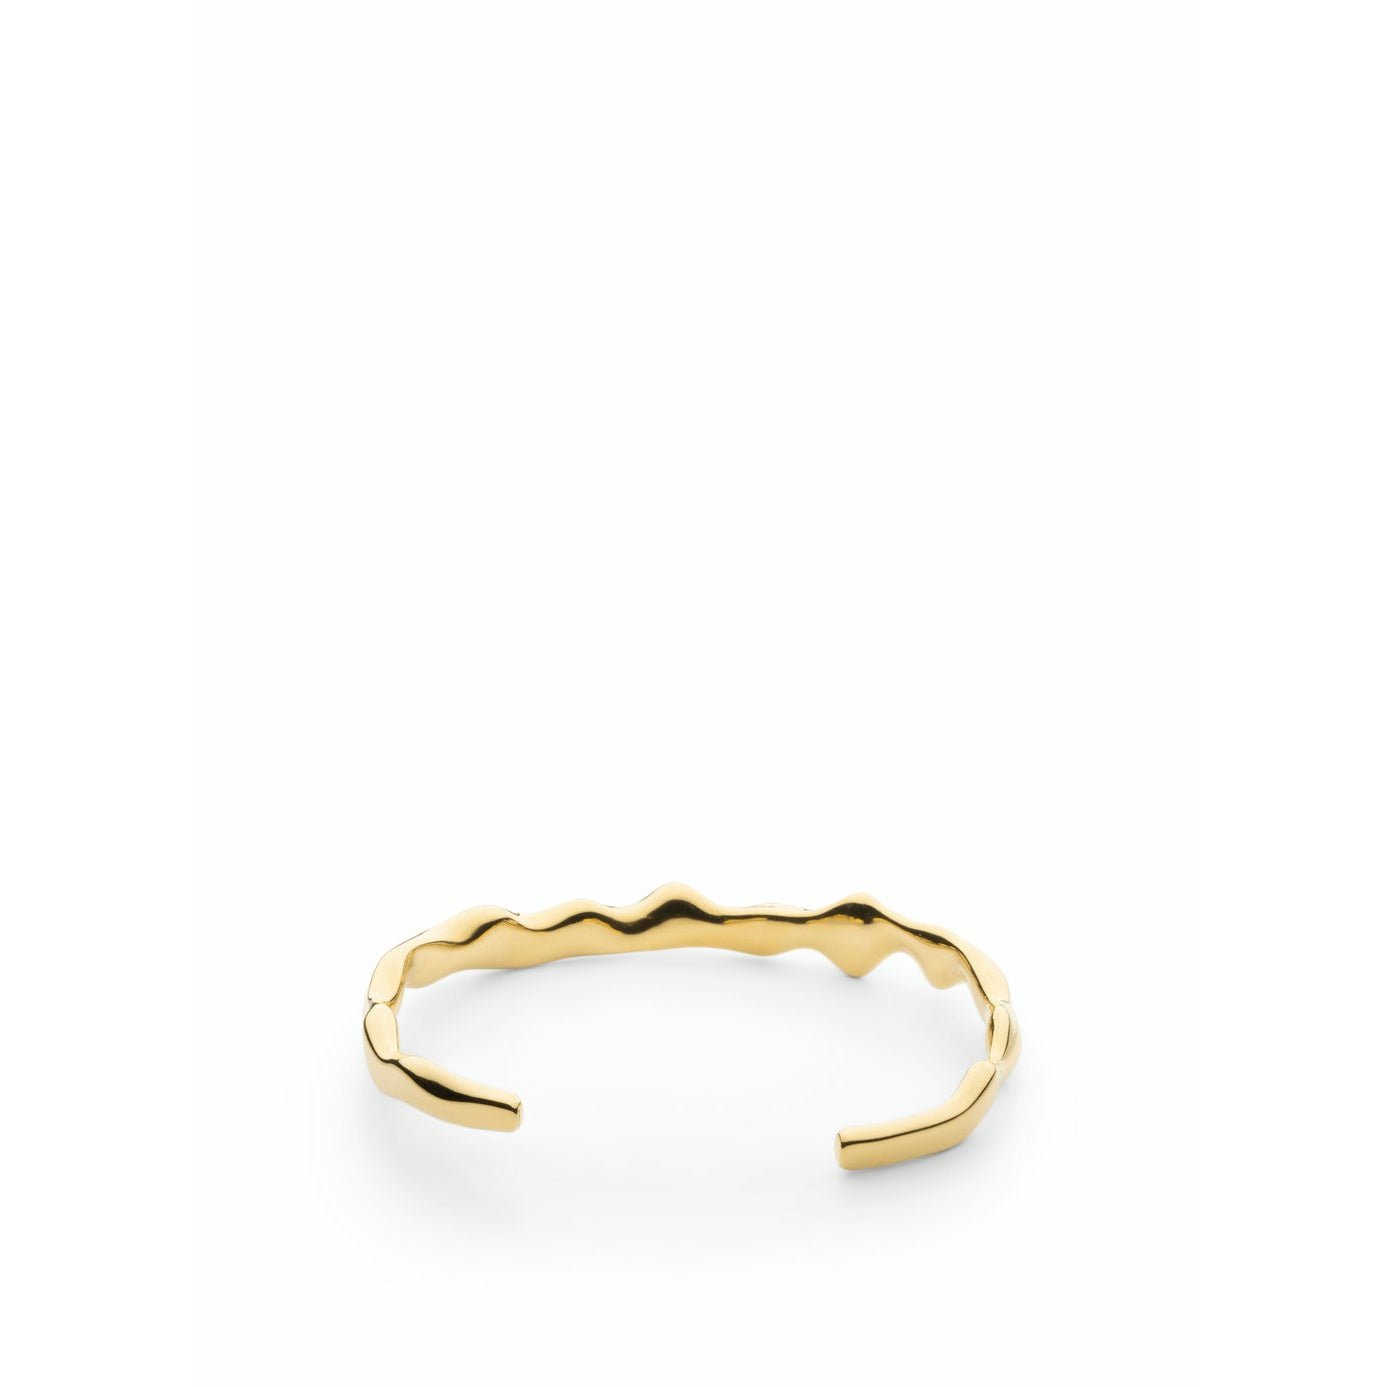 Skultuna Dikke armband groot goud vergulde, Ø18,5 cm